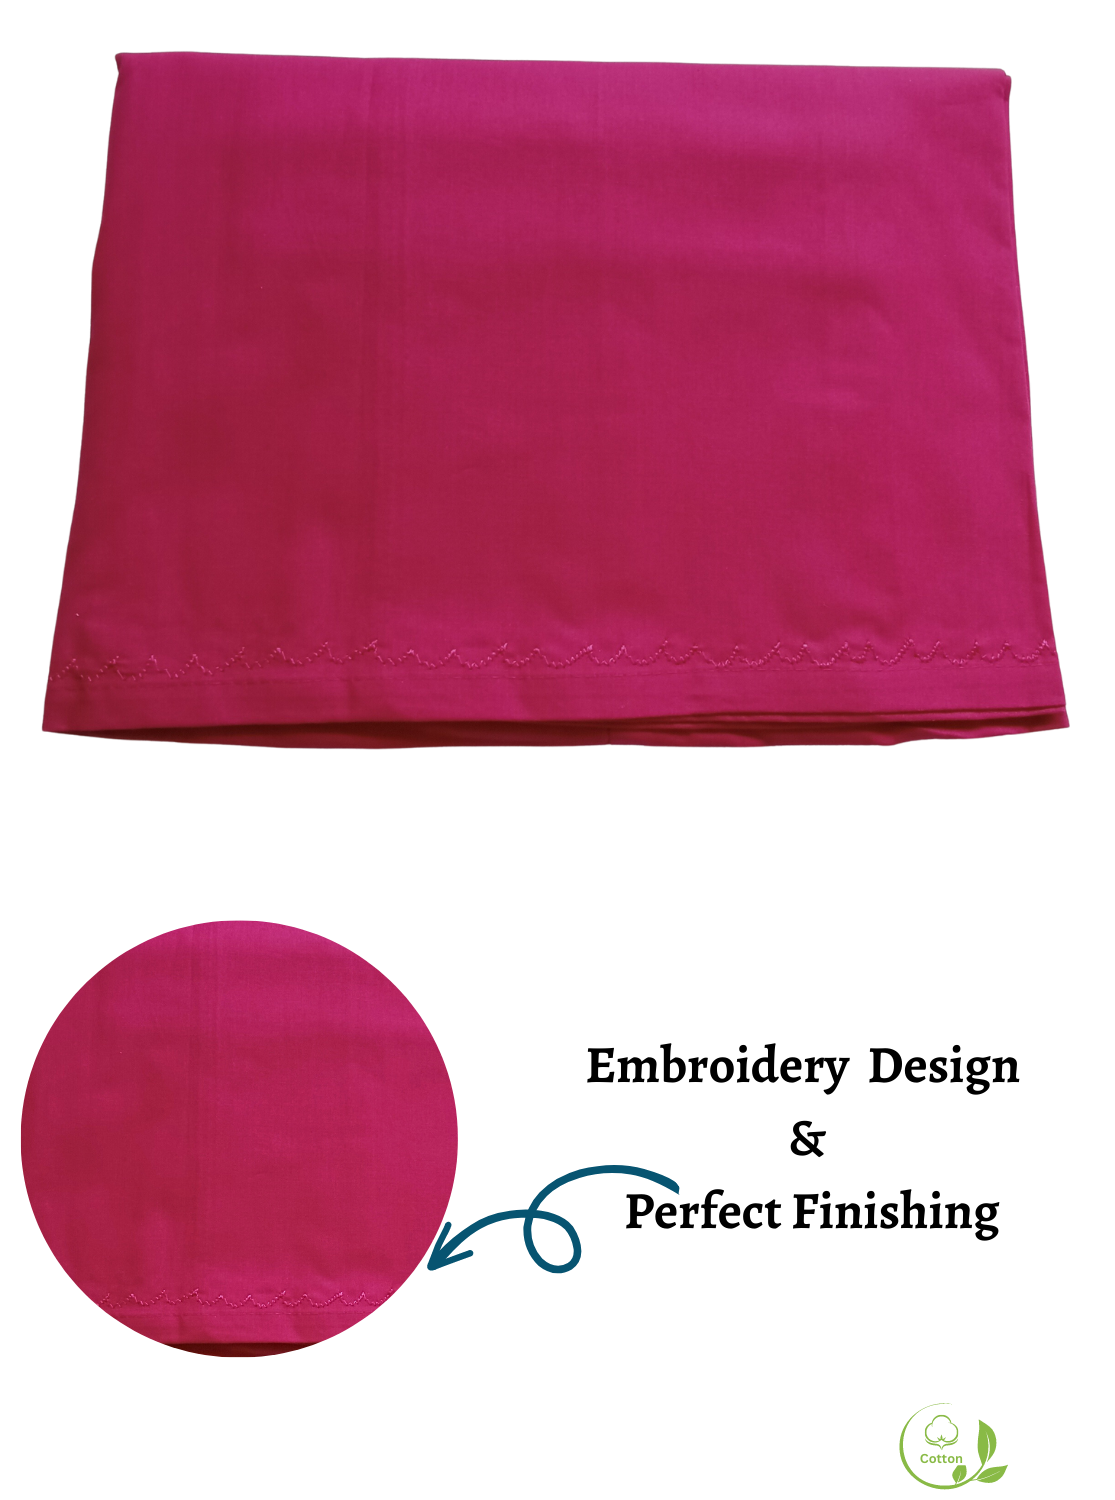 New Arrivals MANGAI Superior Cotton Petticoats - 7 Part Premium Embroidery Petticoats